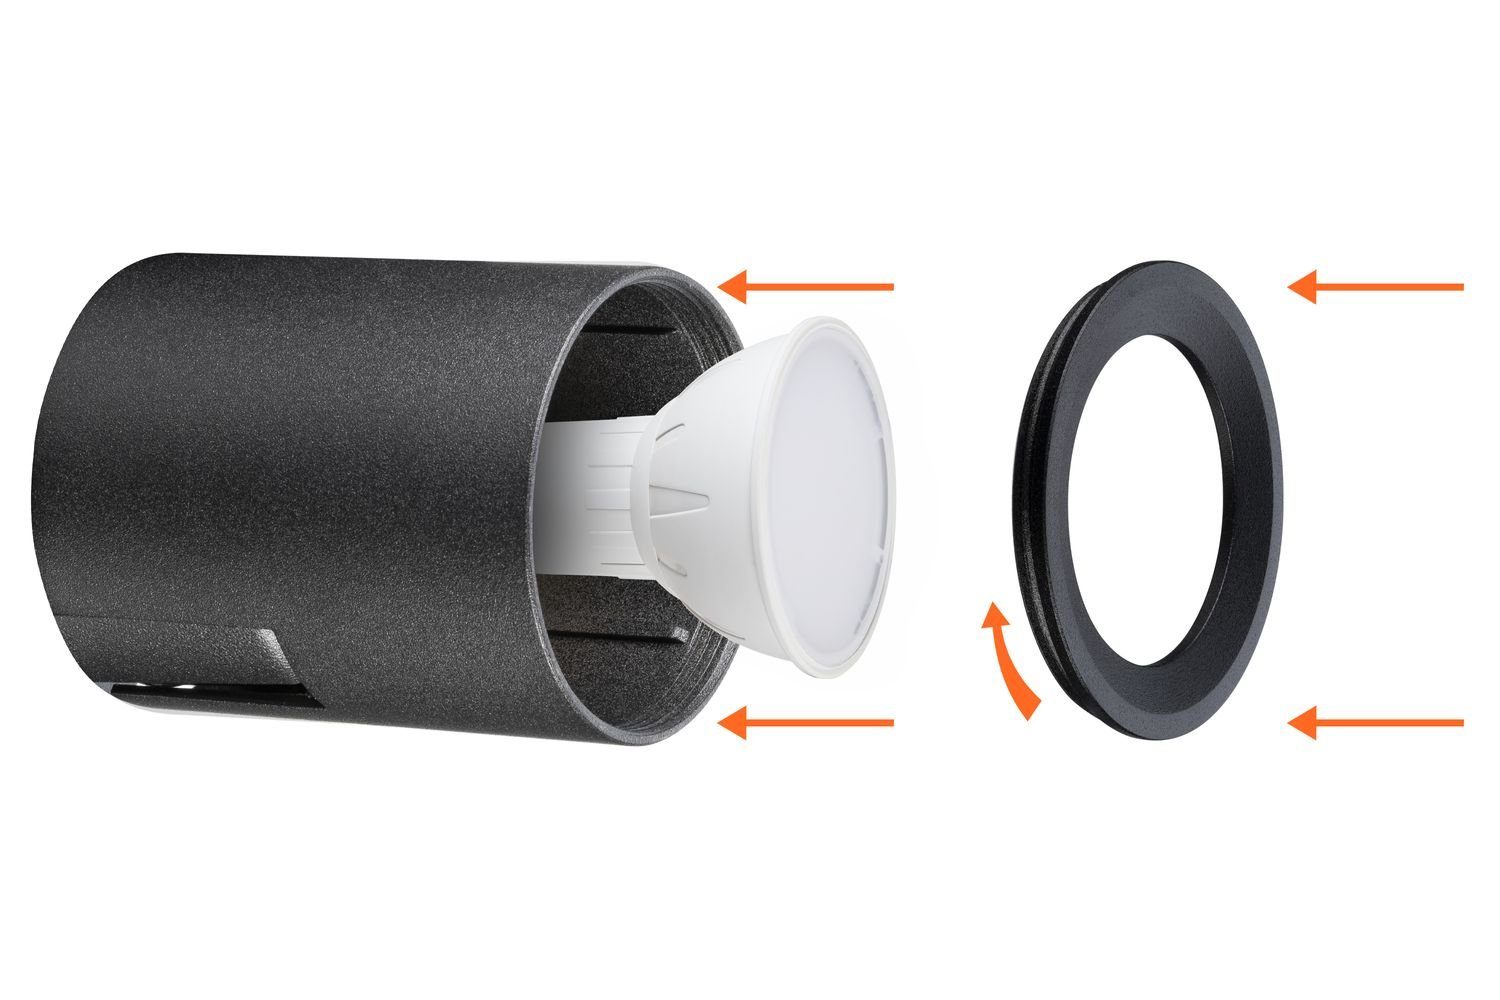 GU10 Nirual LED schwarz tauschbar - LED 4-flammig Deckenspots Deckenleuchte LEDANDO - - Spotle